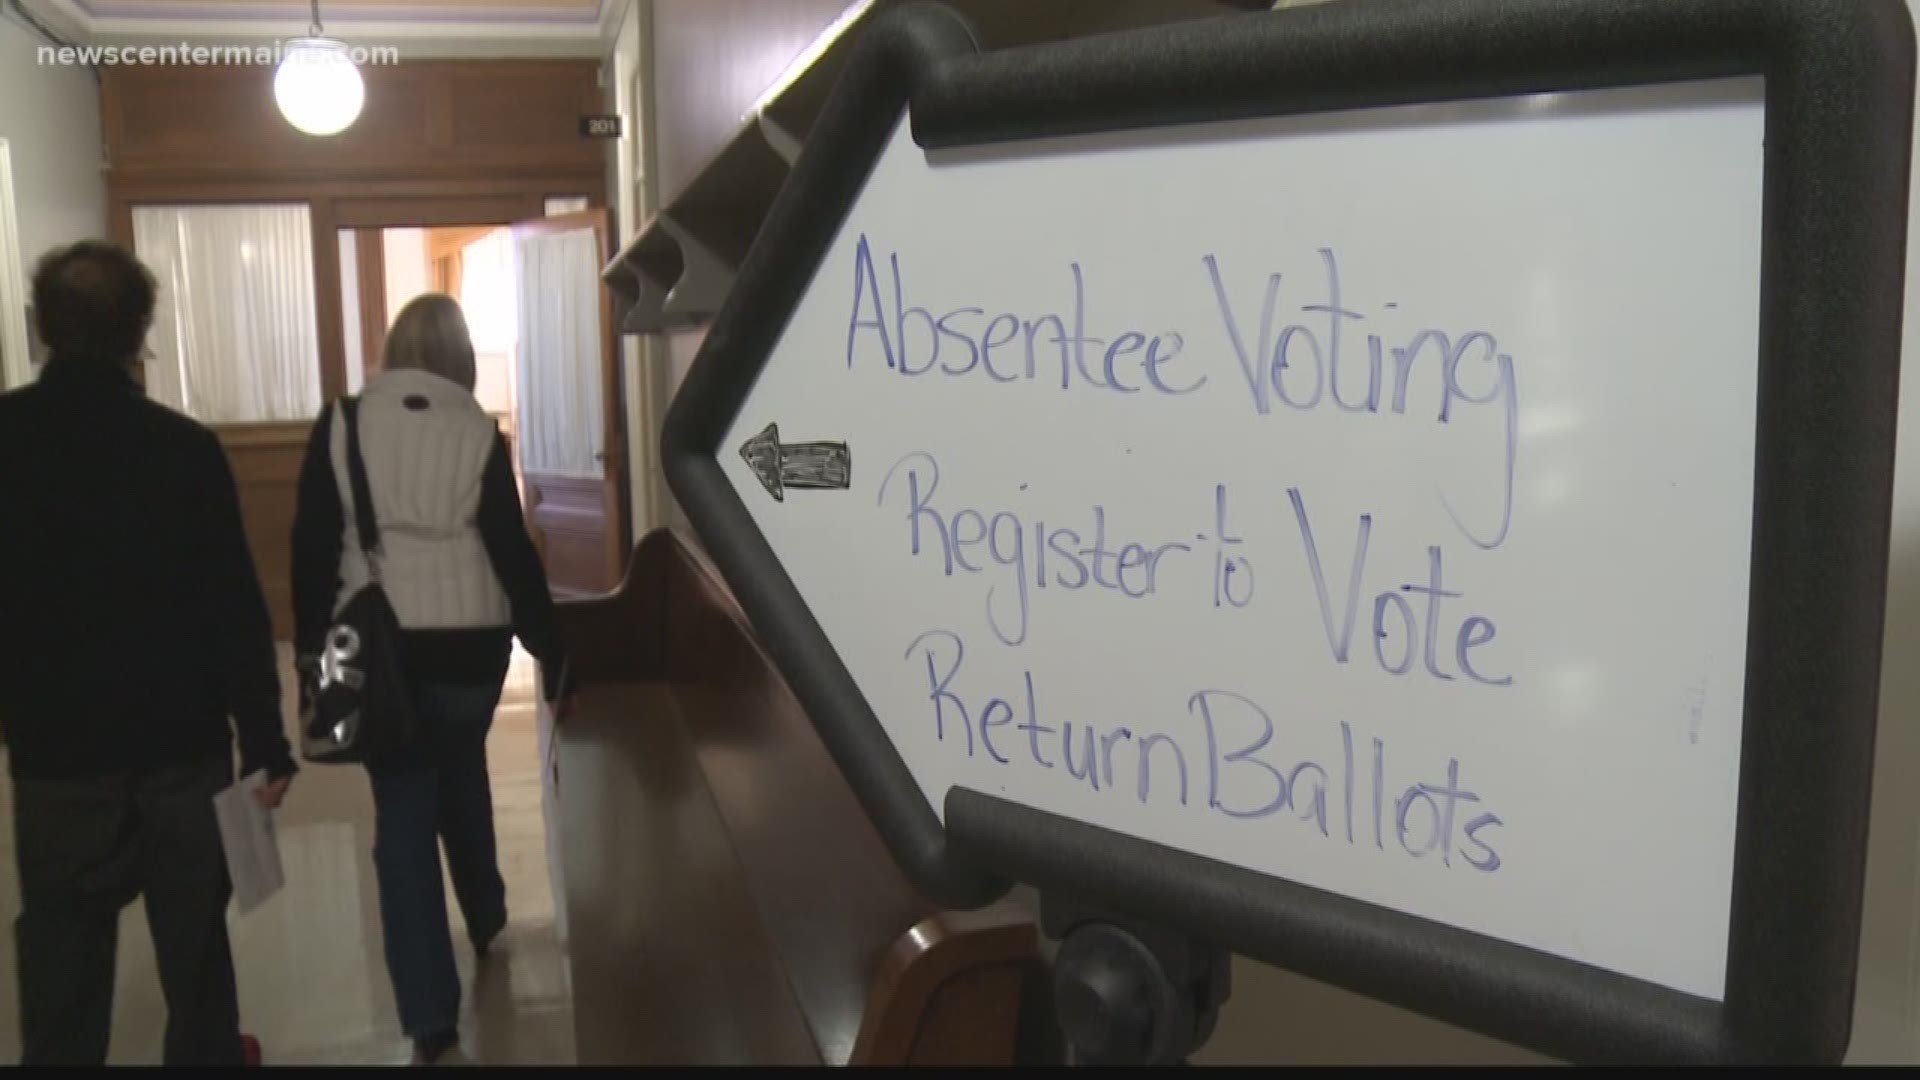 Absentee voting starts in Portland